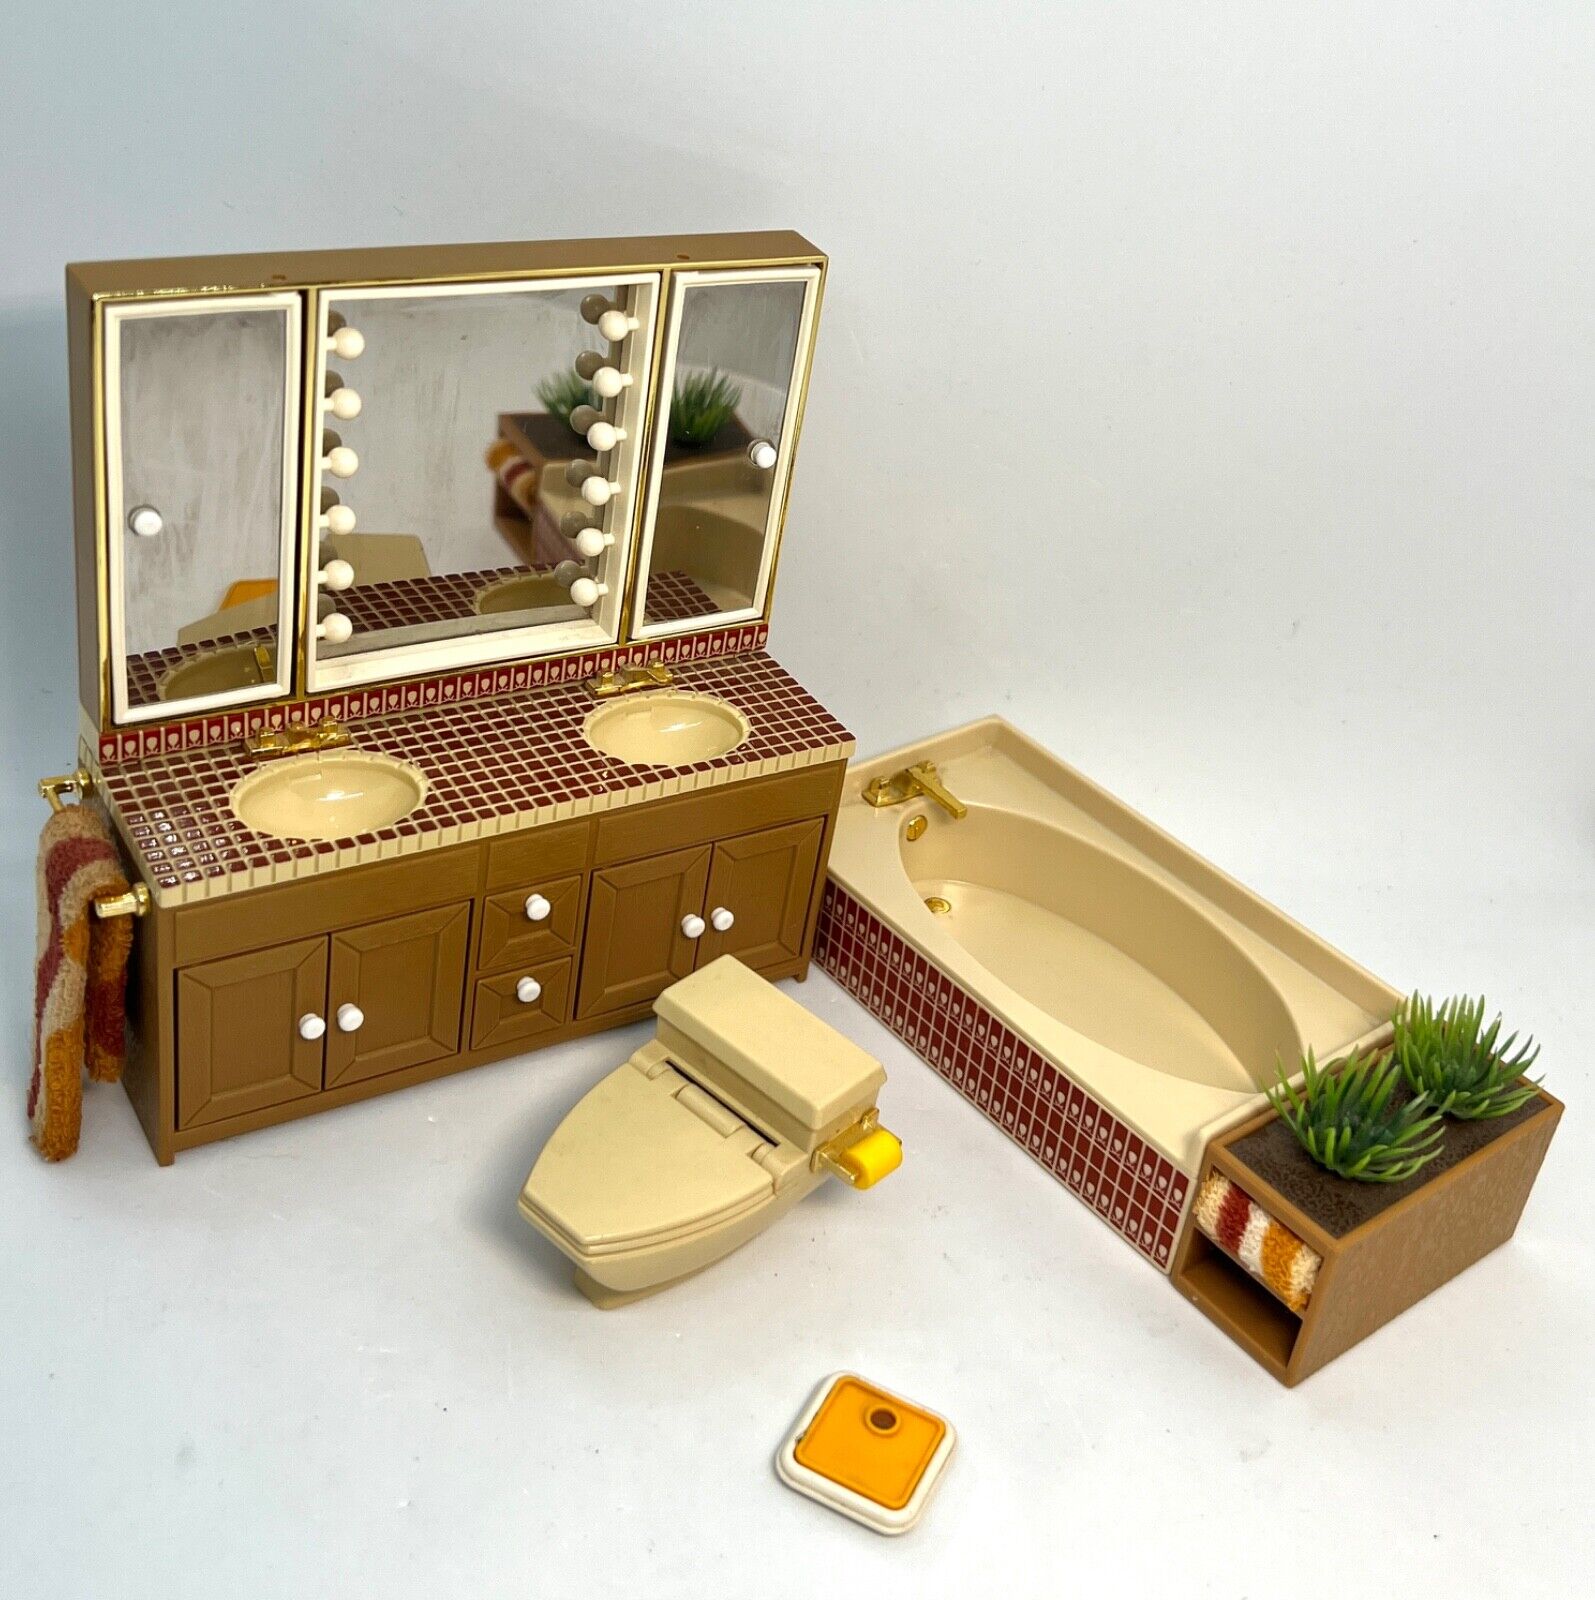 Tomy Smaller Homes Bathroom Dollhouse Miniature Furniture Vintage Japan